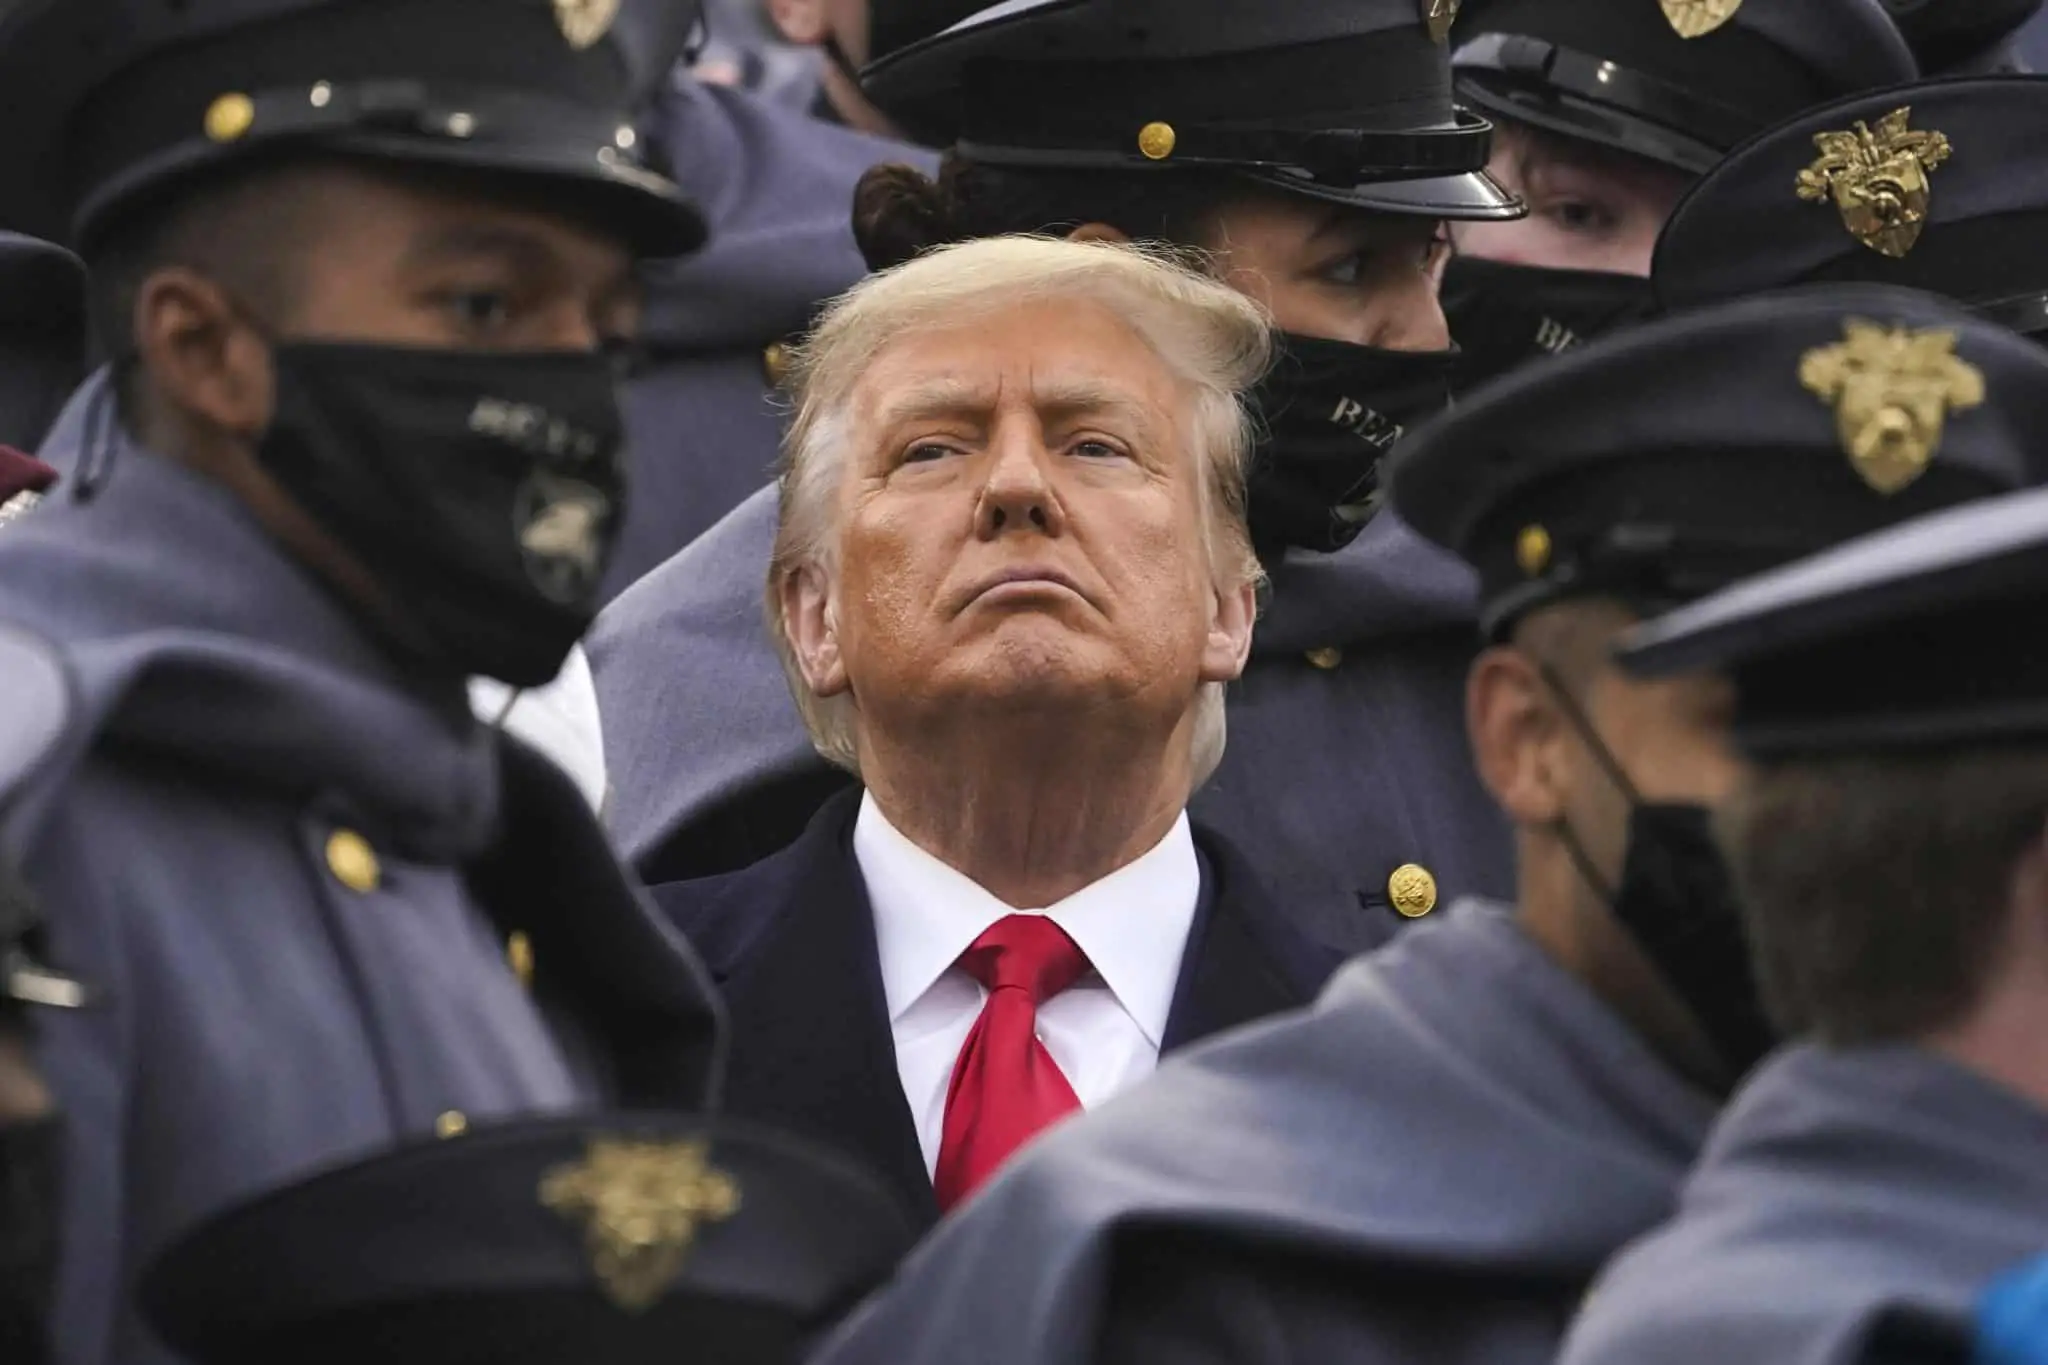 Trump ponders martial law, considers